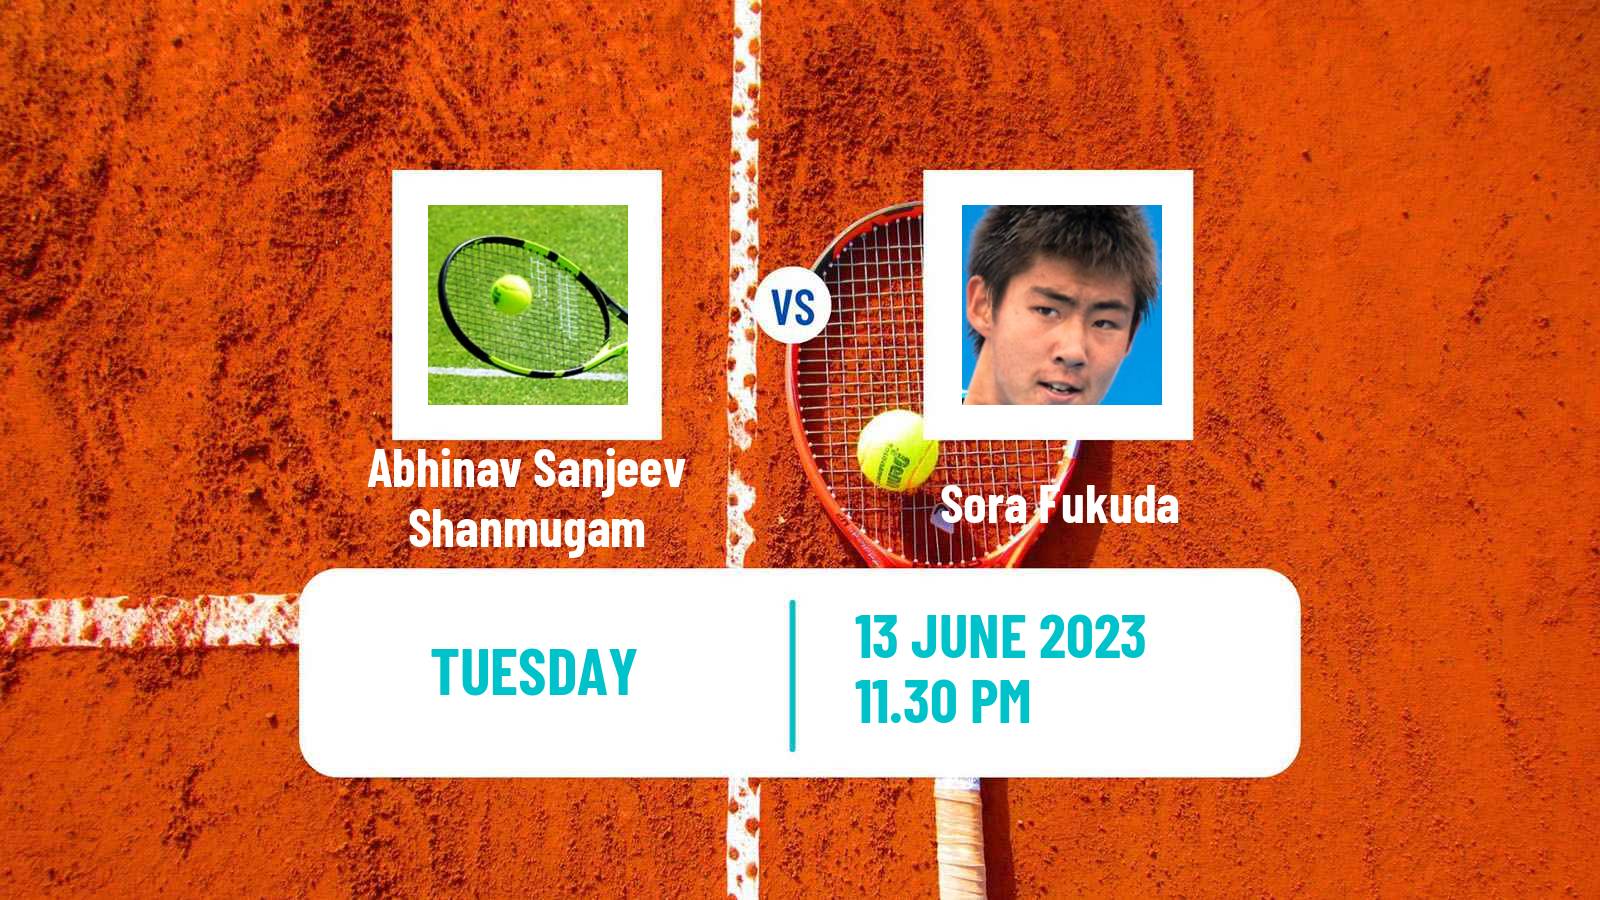 Tennis ITF M15 Jakarta 3 Men Abhinav Sanjeev Shanmugam - Sora Fukuda